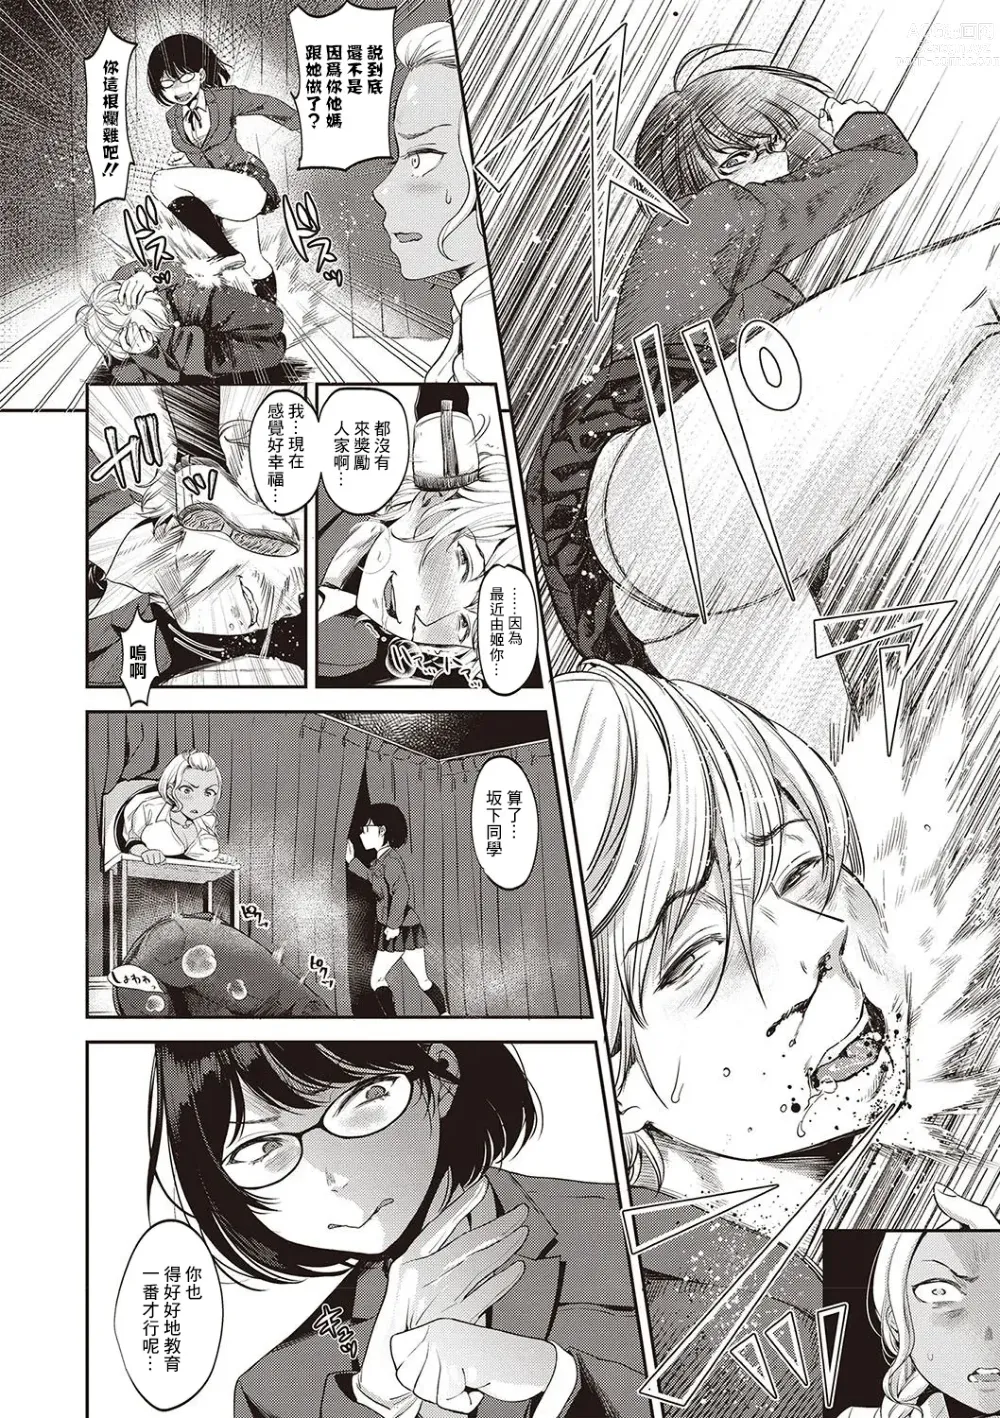 Page 6 of manga Black Hole